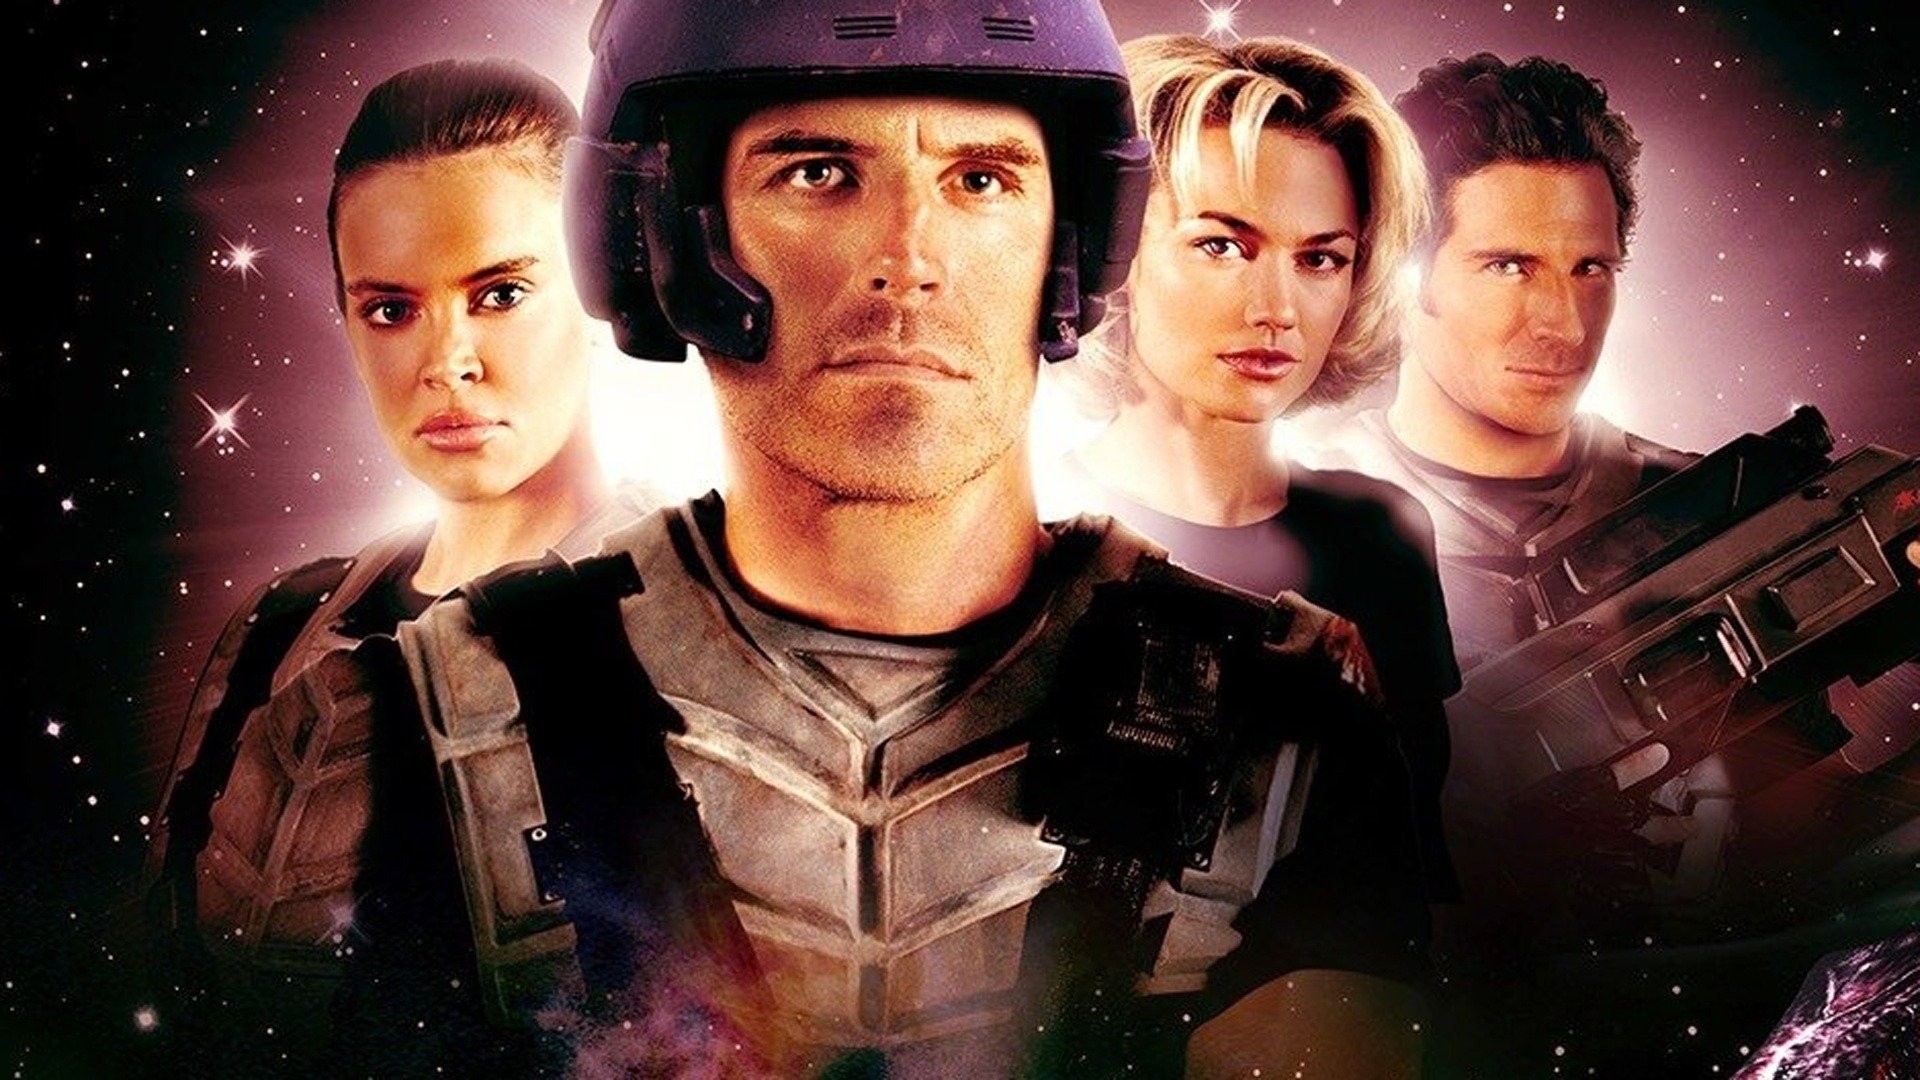 starship troopers 2 imdb